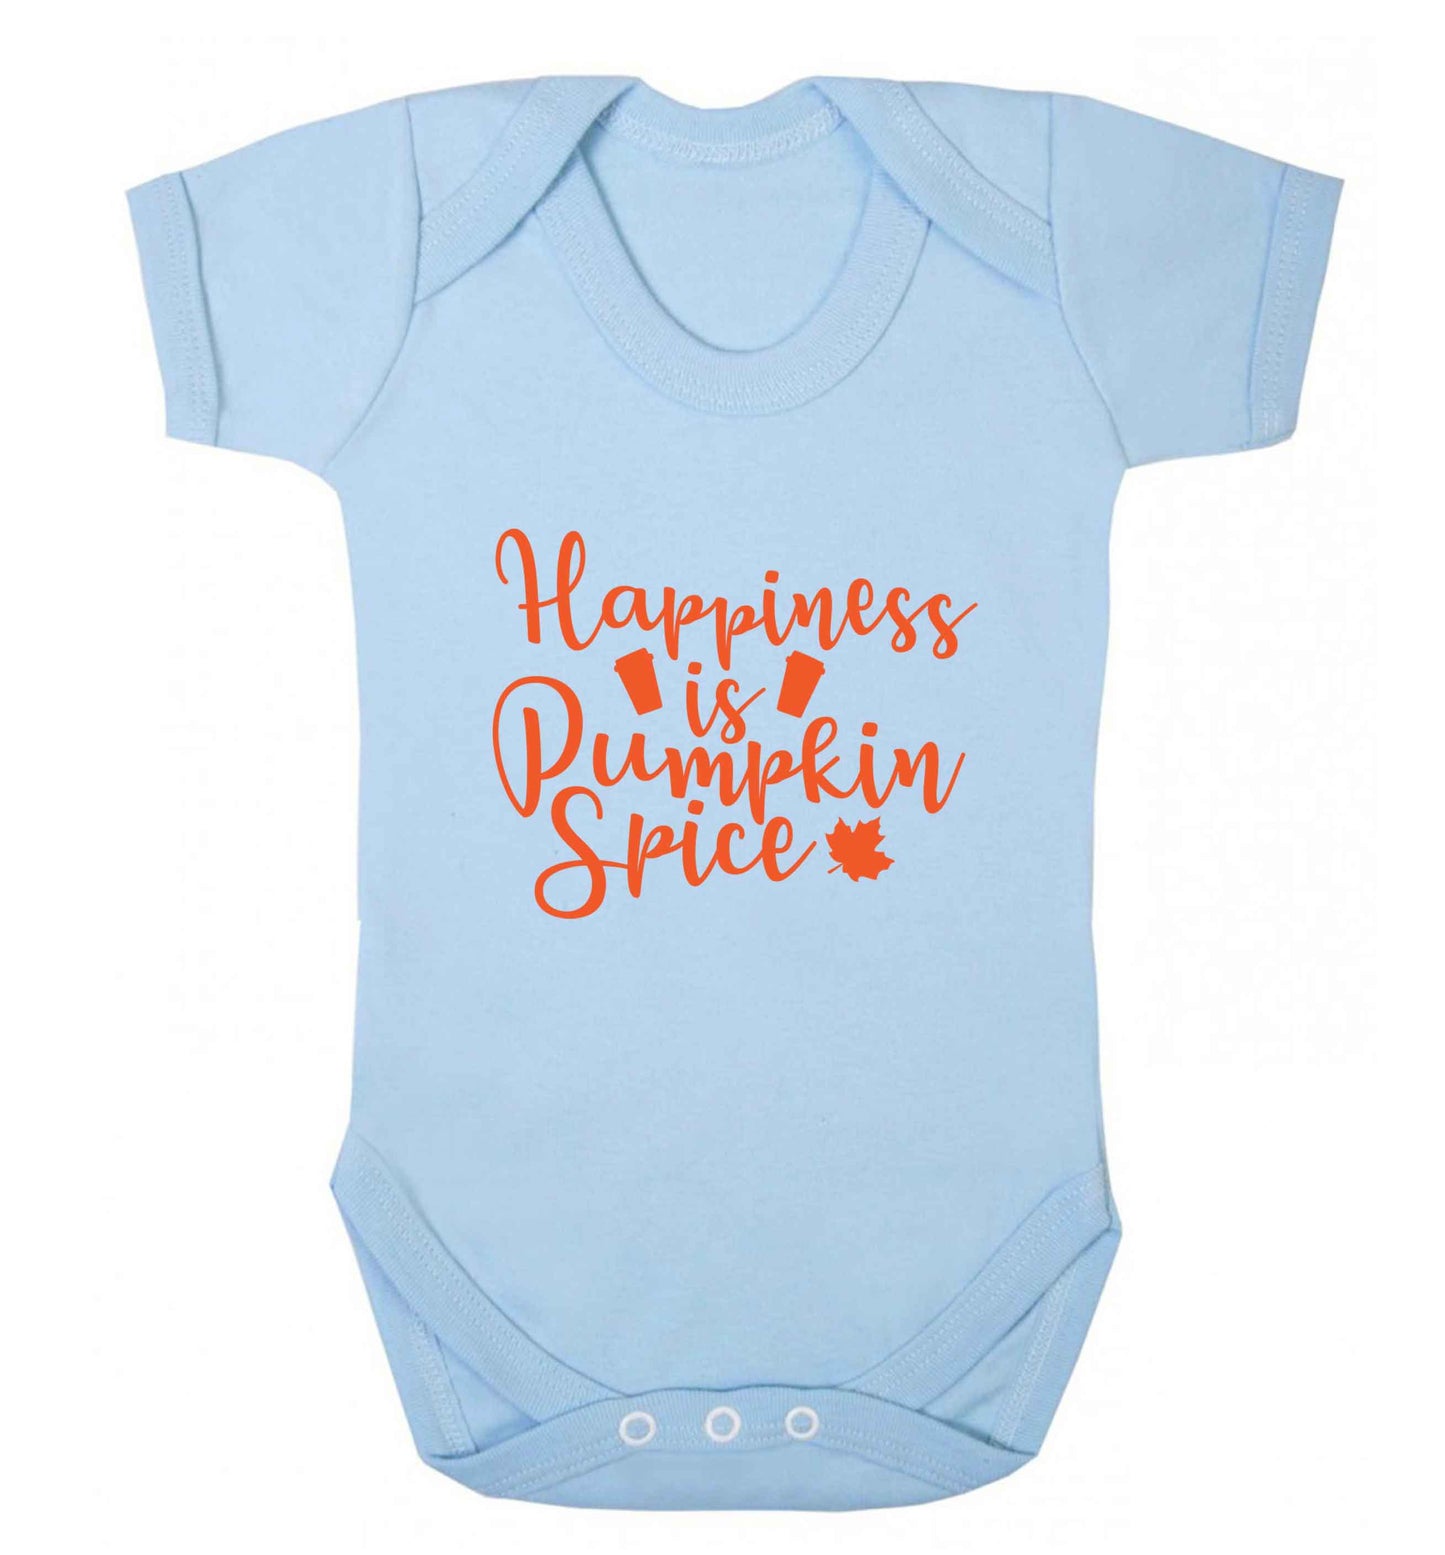 Happiness Pumpkin Spice baby vest pale blue 18-24 months